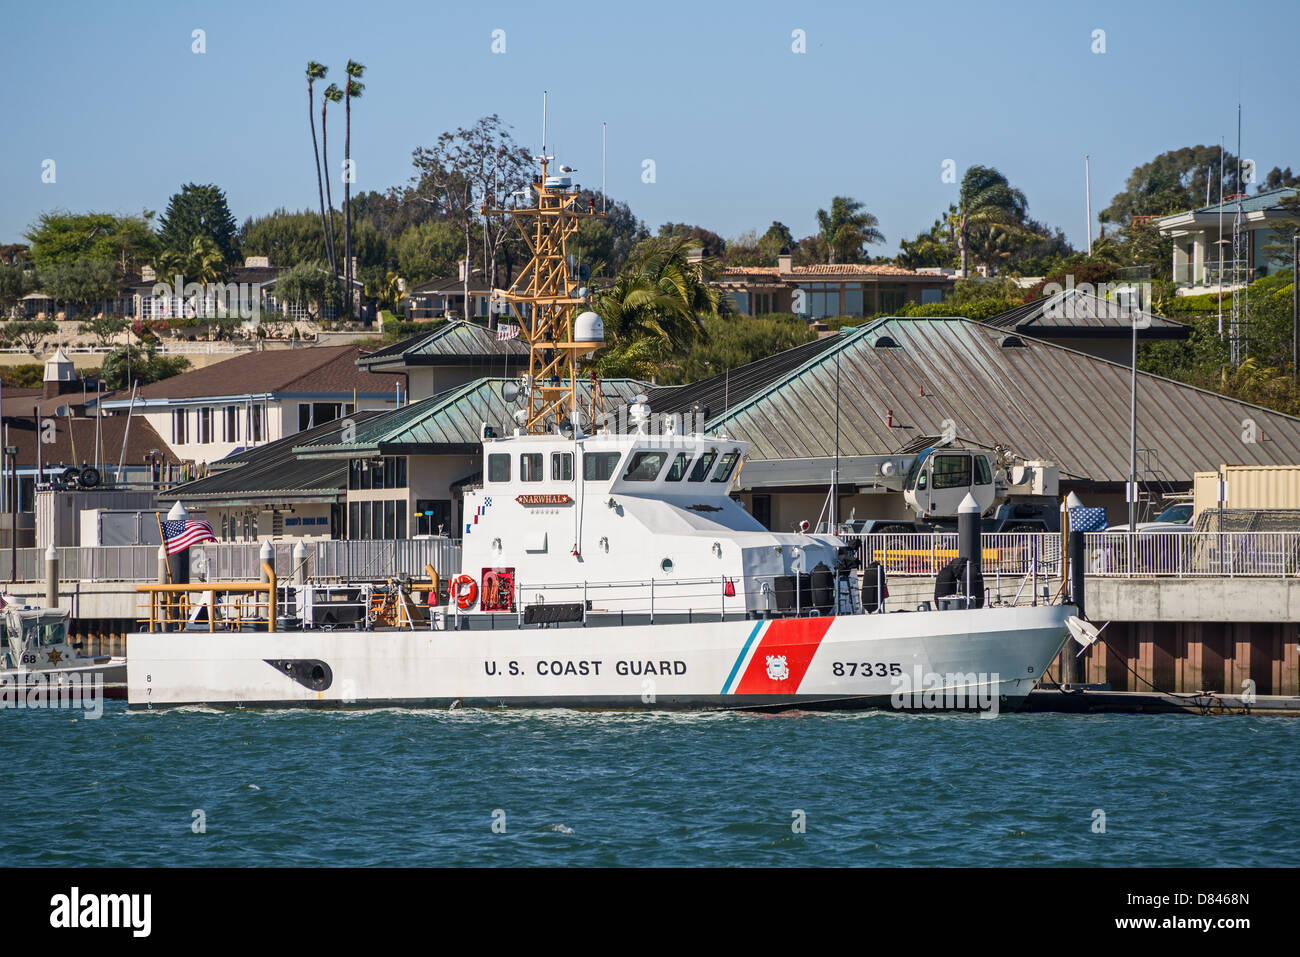 U.S. Coast Guard Station in Newport Beach. Stock Photo